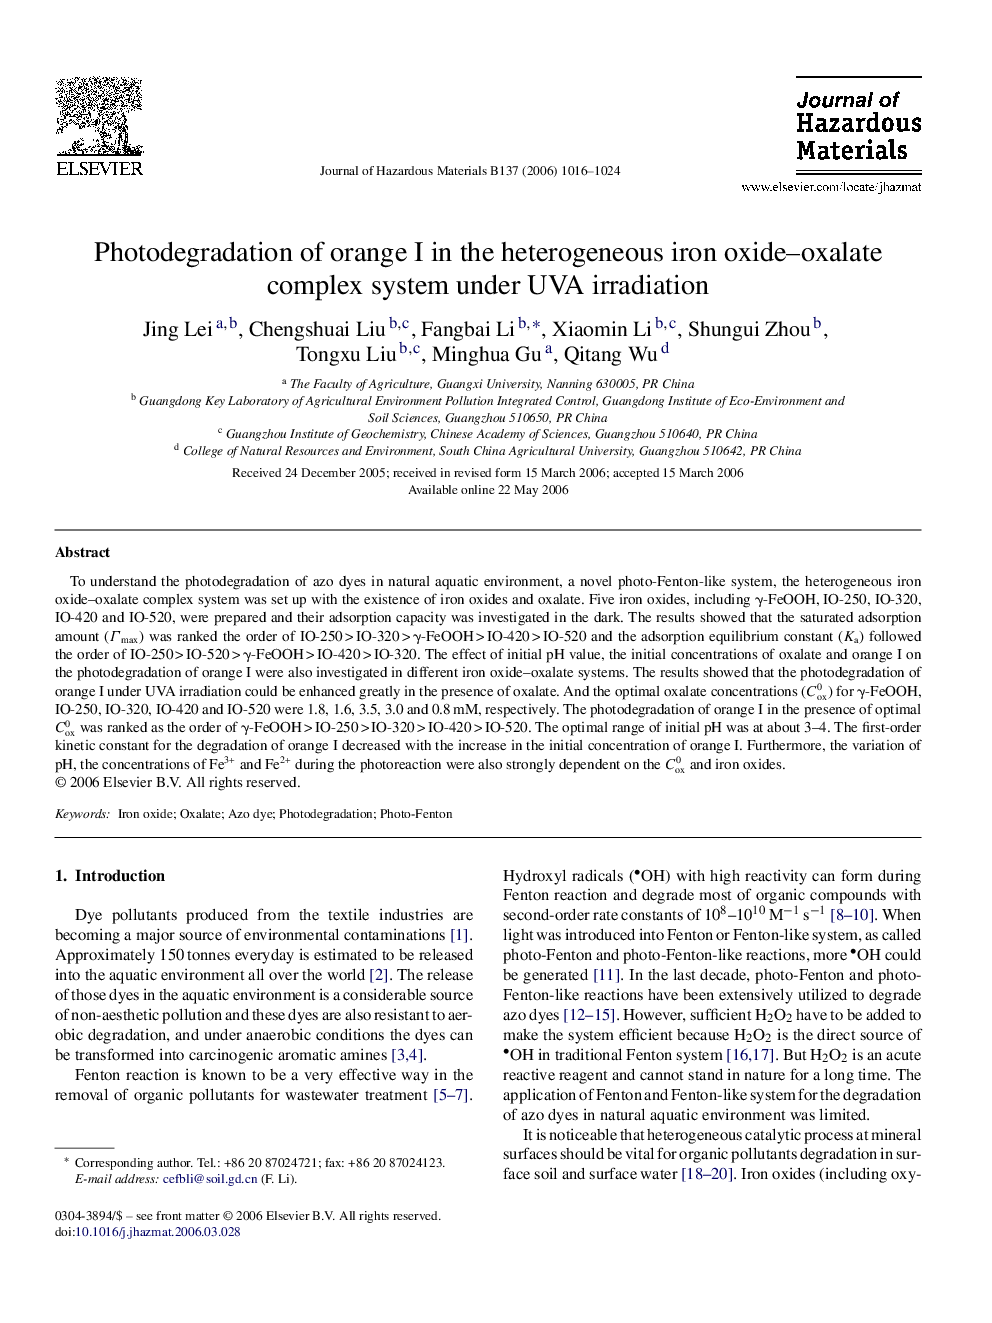 Photodegradation of orange I in the heterogeneous iron oxide-oxalate complex system under UVA irradiation